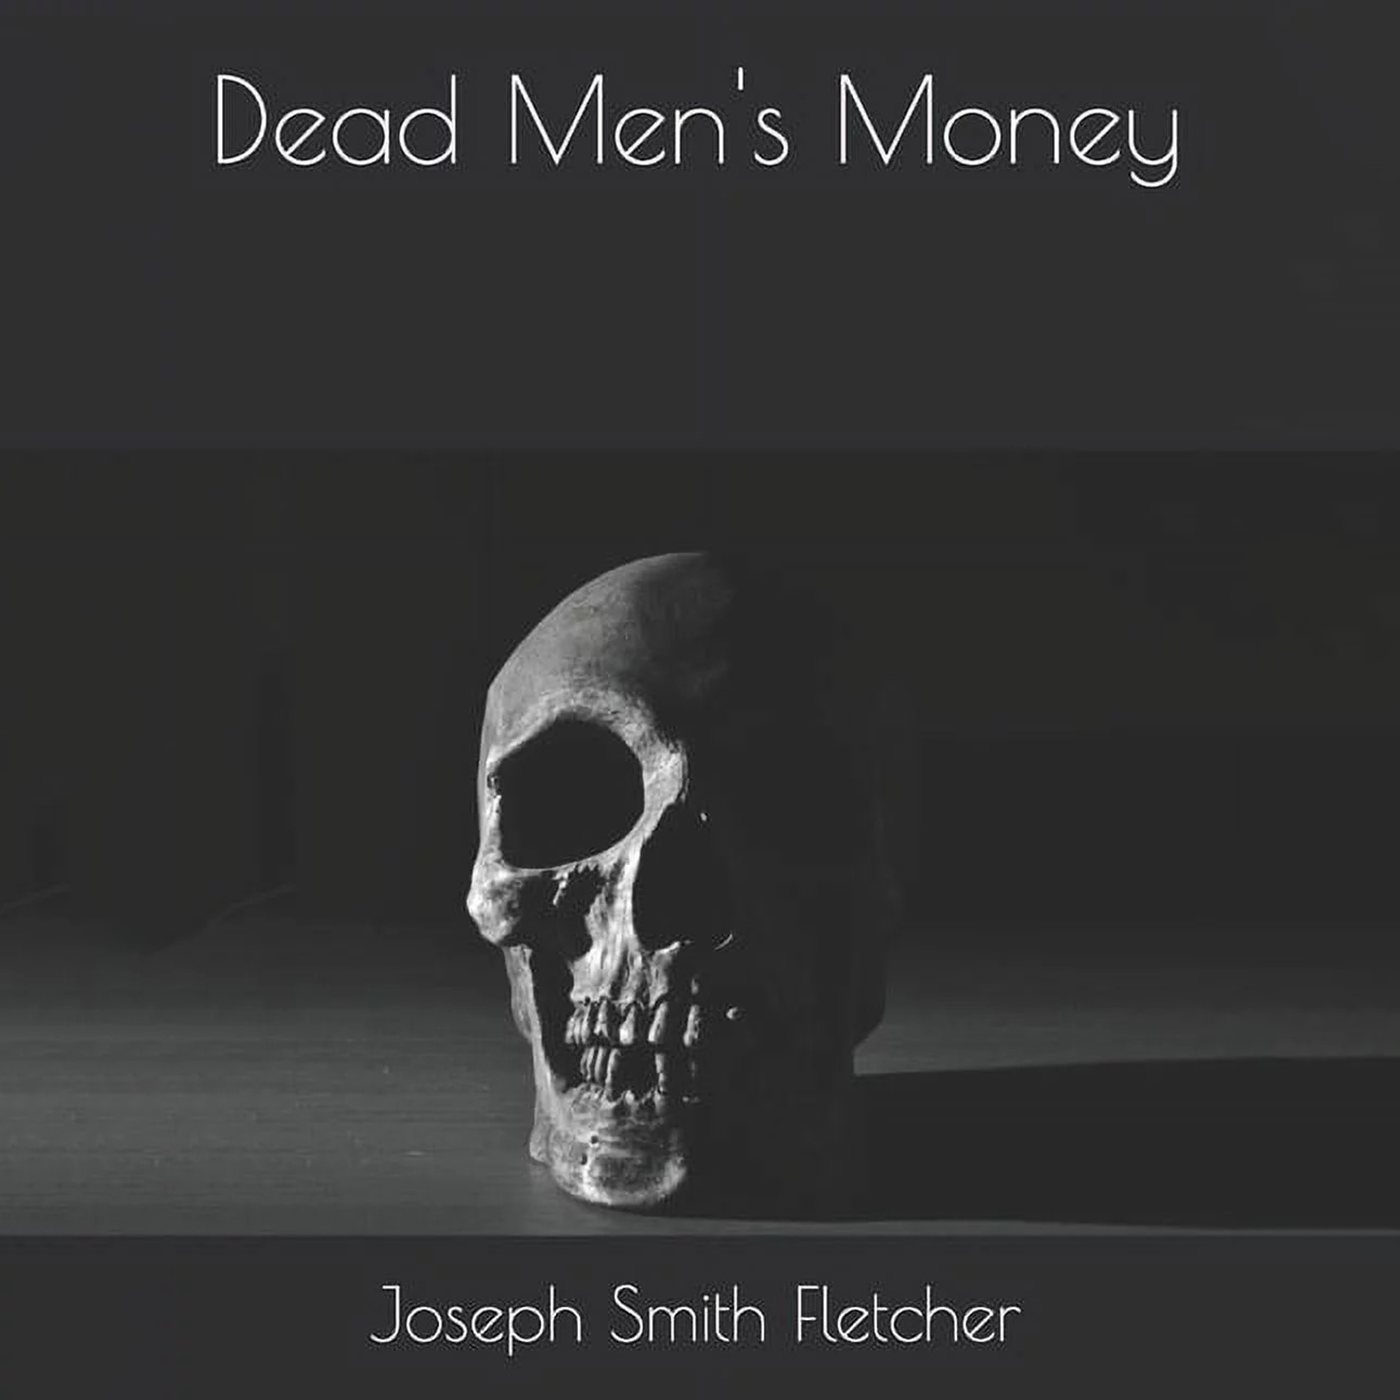 Dead Men’s Money by Joseph Smith Fletcher